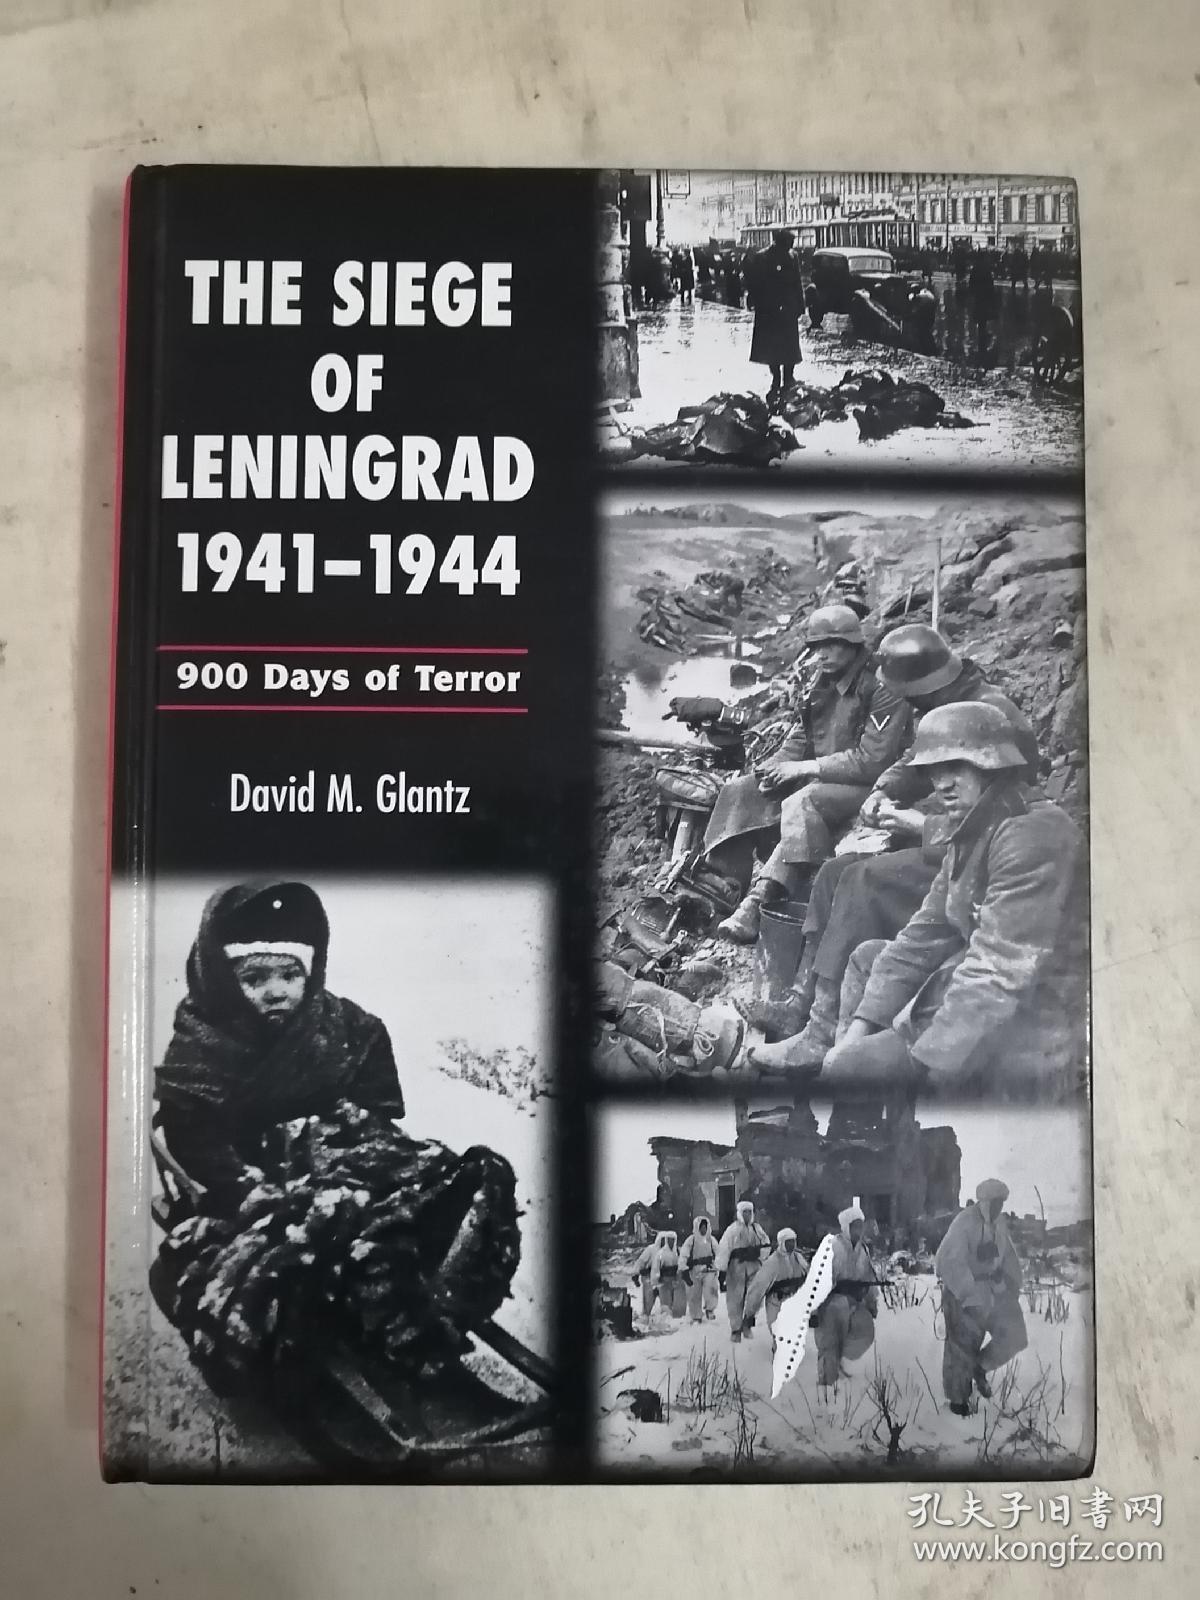 THE SIEGE OF LENINGRAD 1941-1944